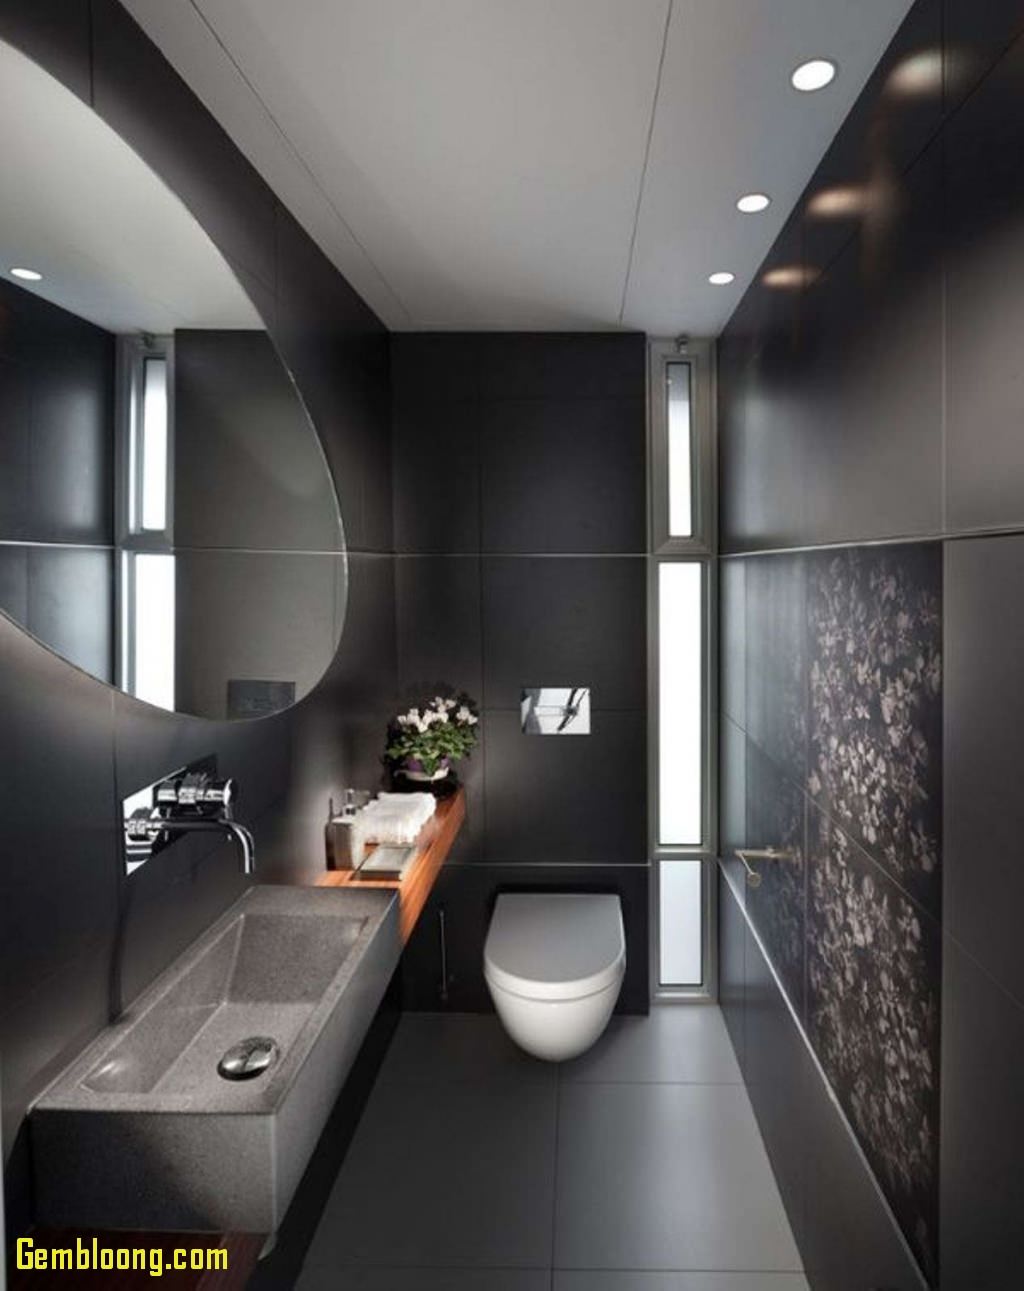 Tile for Bathroom; Small, Medium, and Big As Backsplash